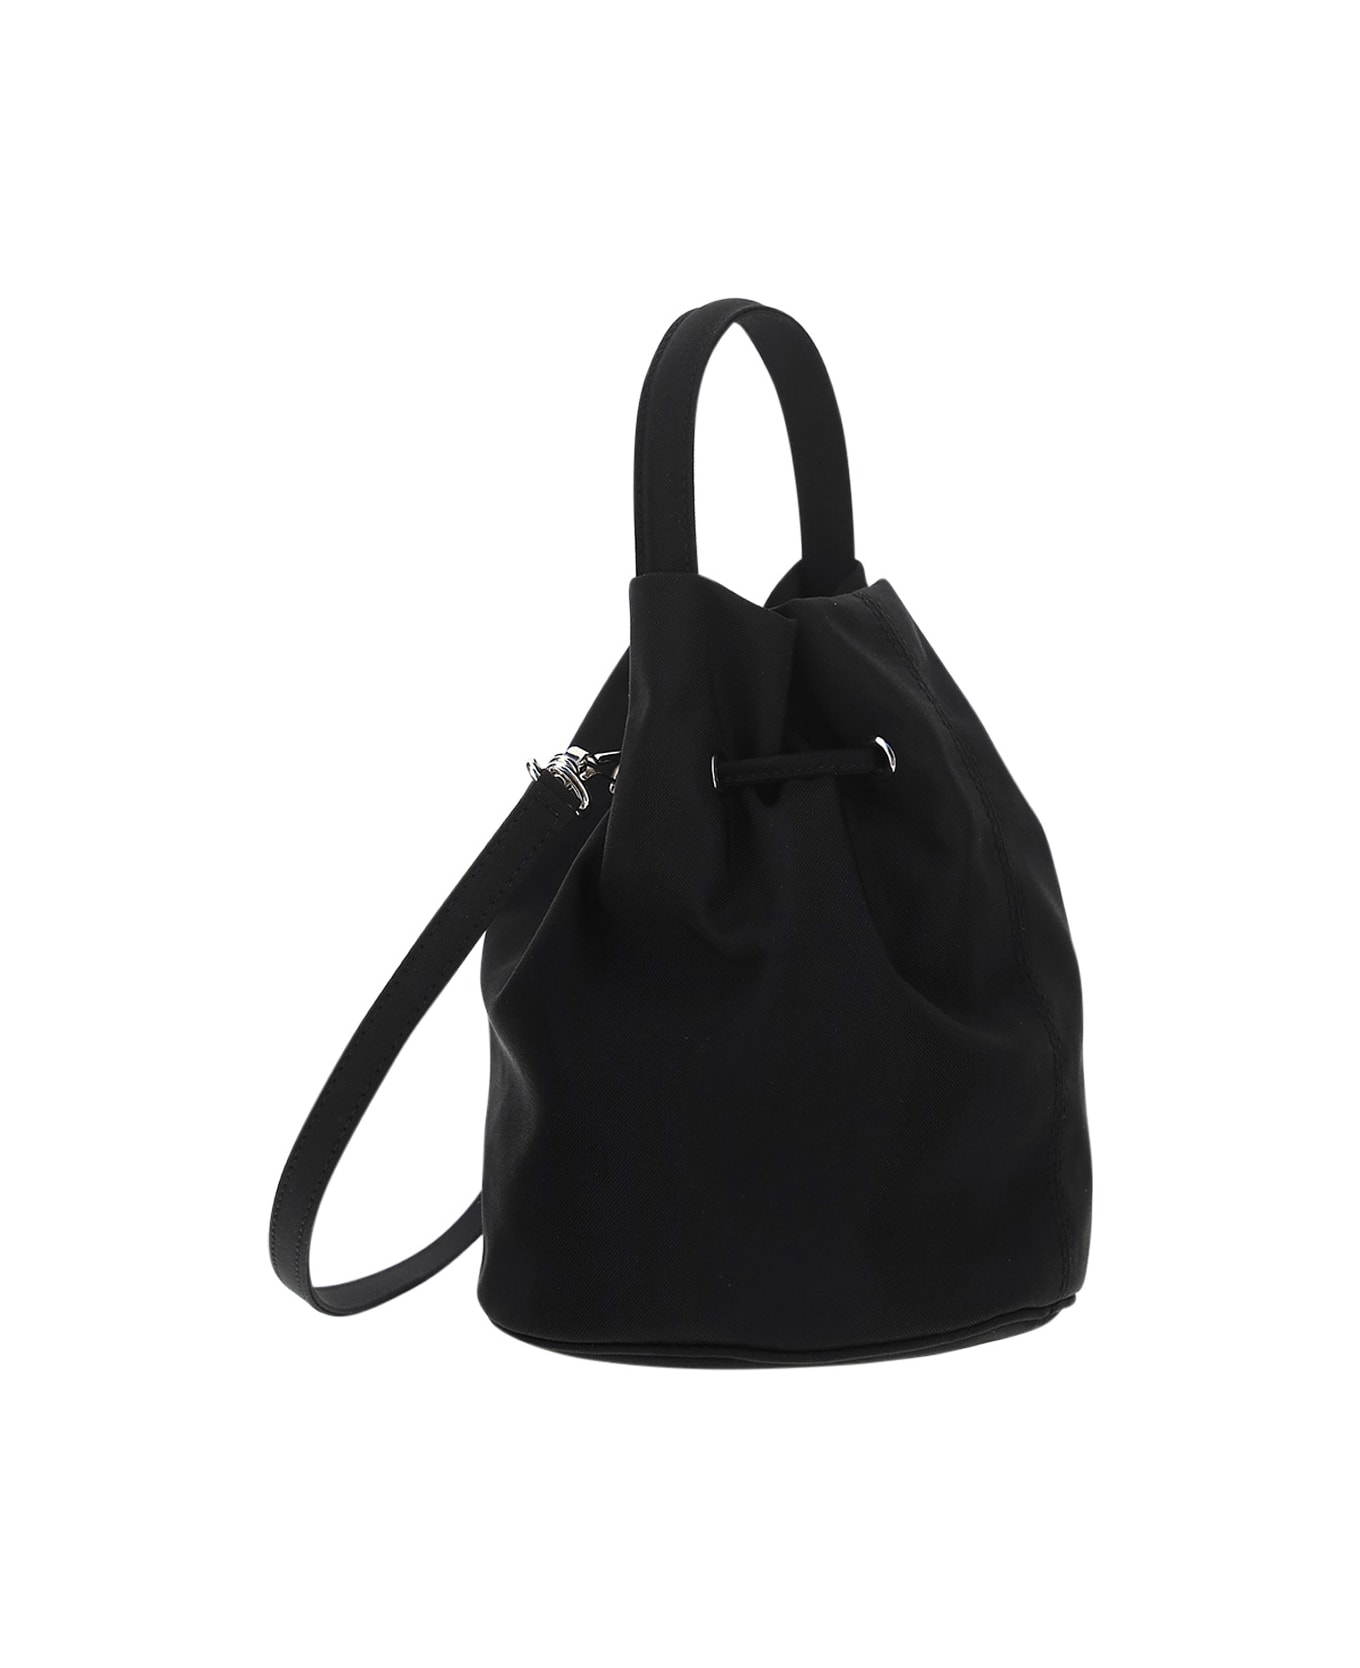 Balenciaga Bucket Bag - Black/l White